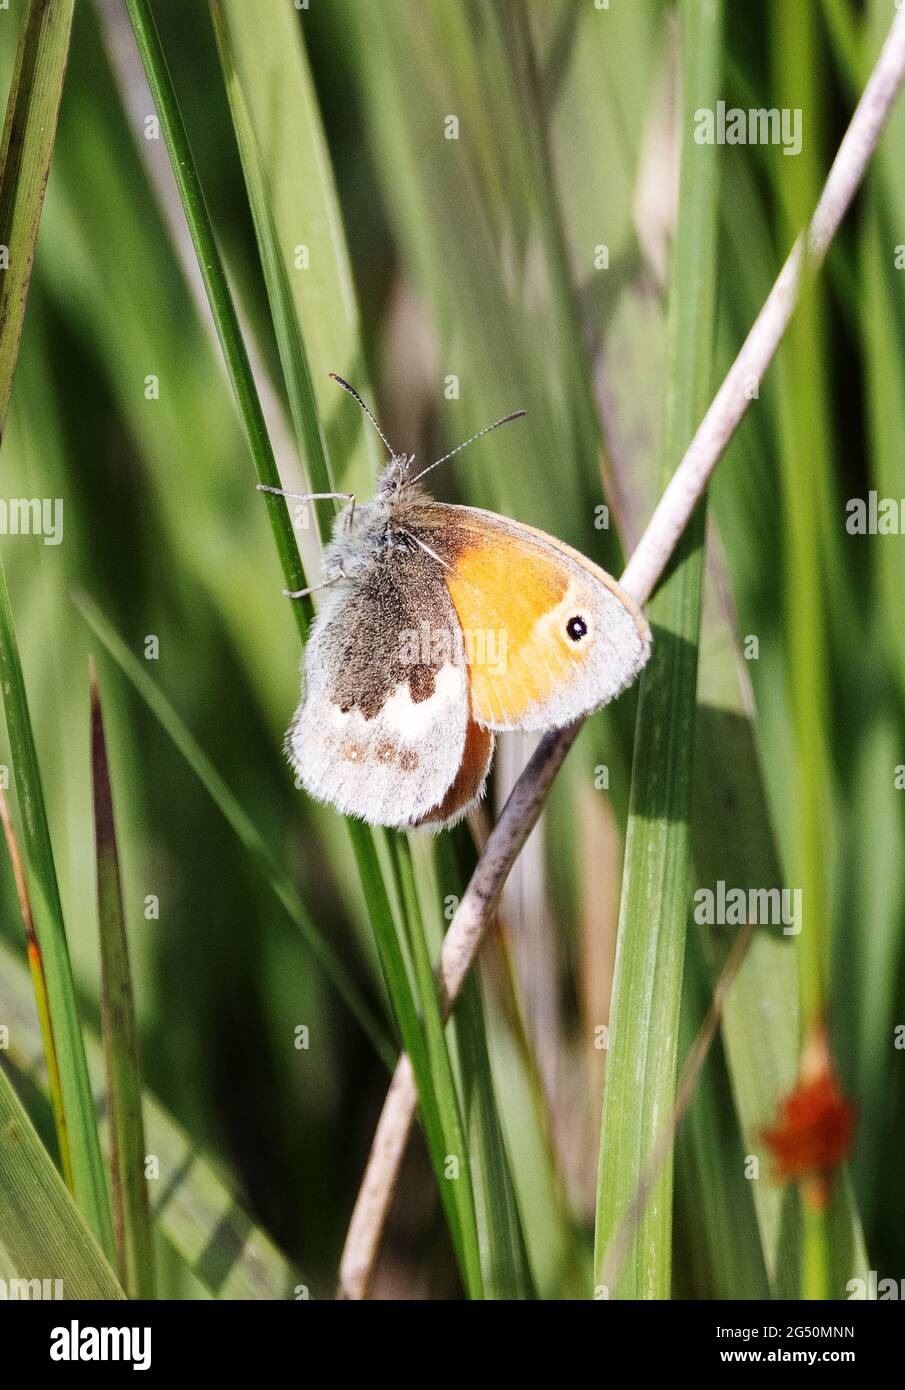 British Butterflies; The Meadow Brown butterfly, Maniola jurtina on grass, Wales, UK Stock Photo